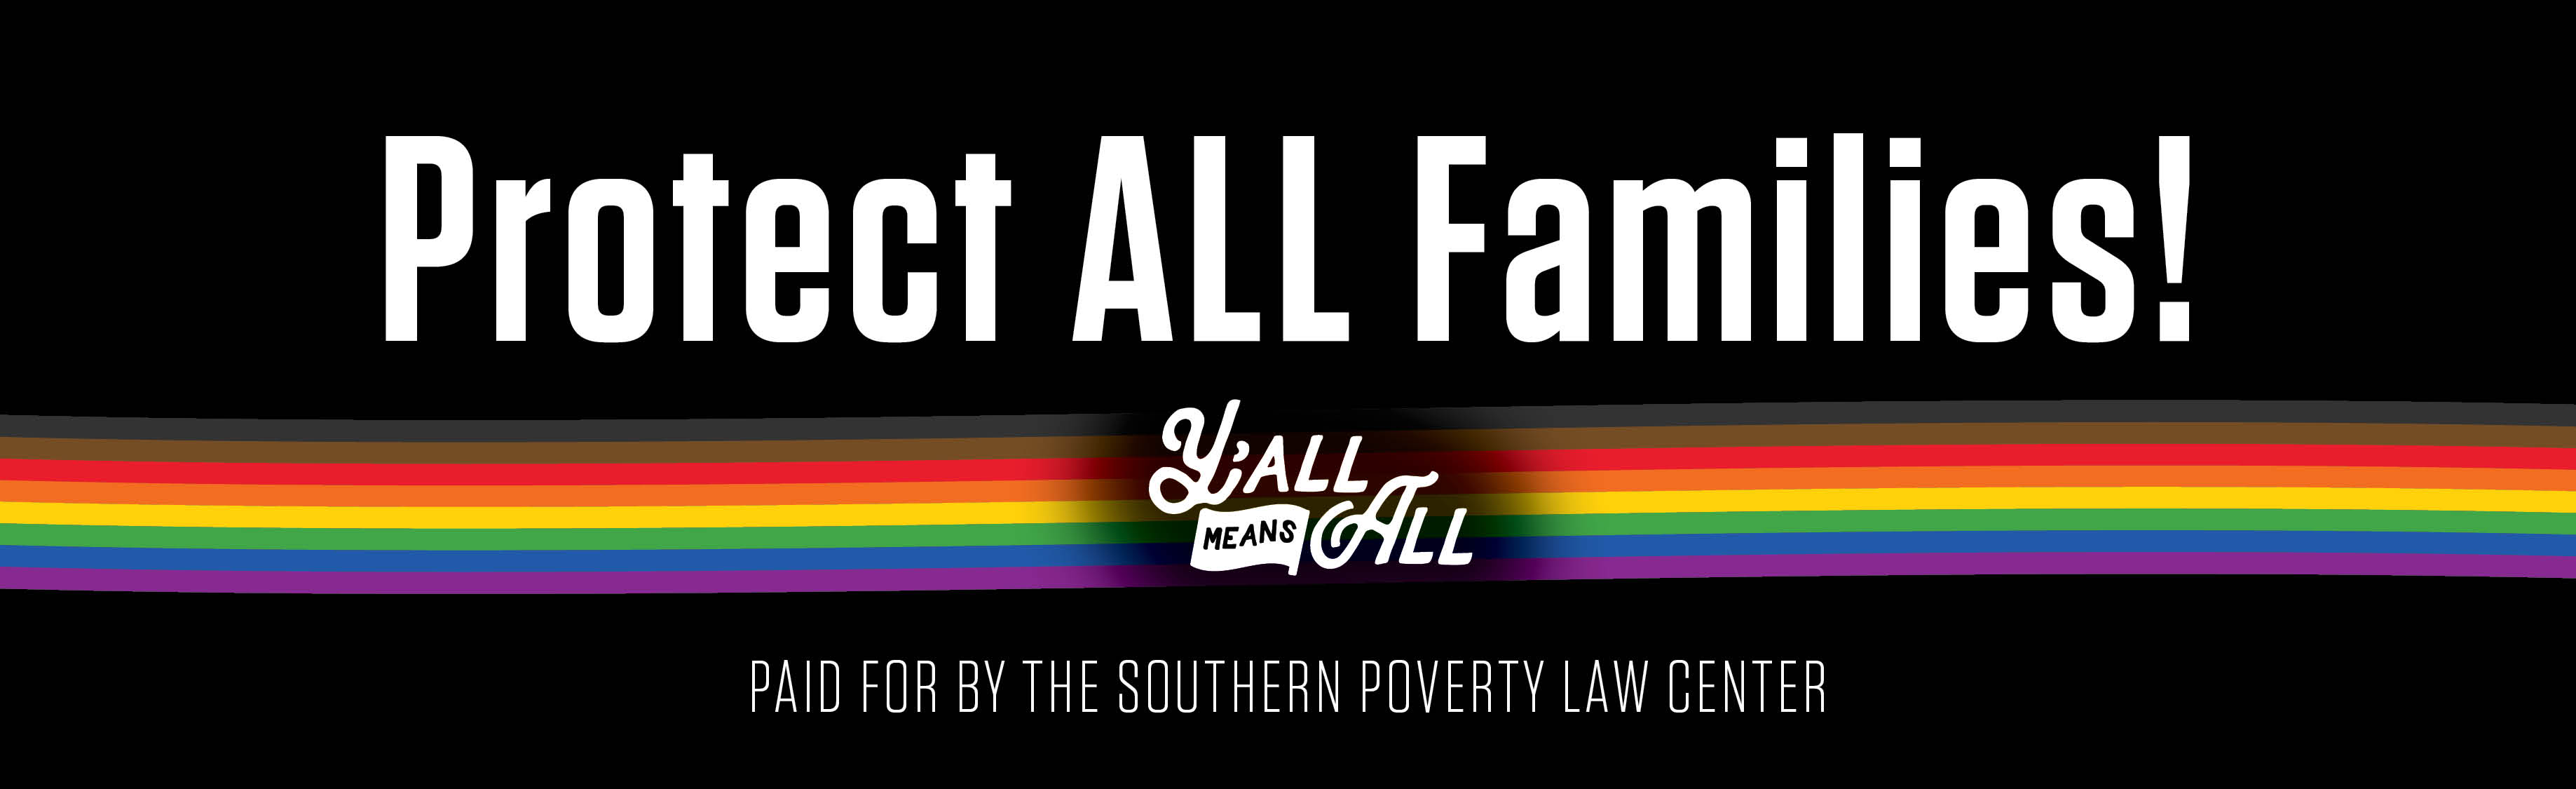 LGBTQ Billboard in Birmingham, Alabama